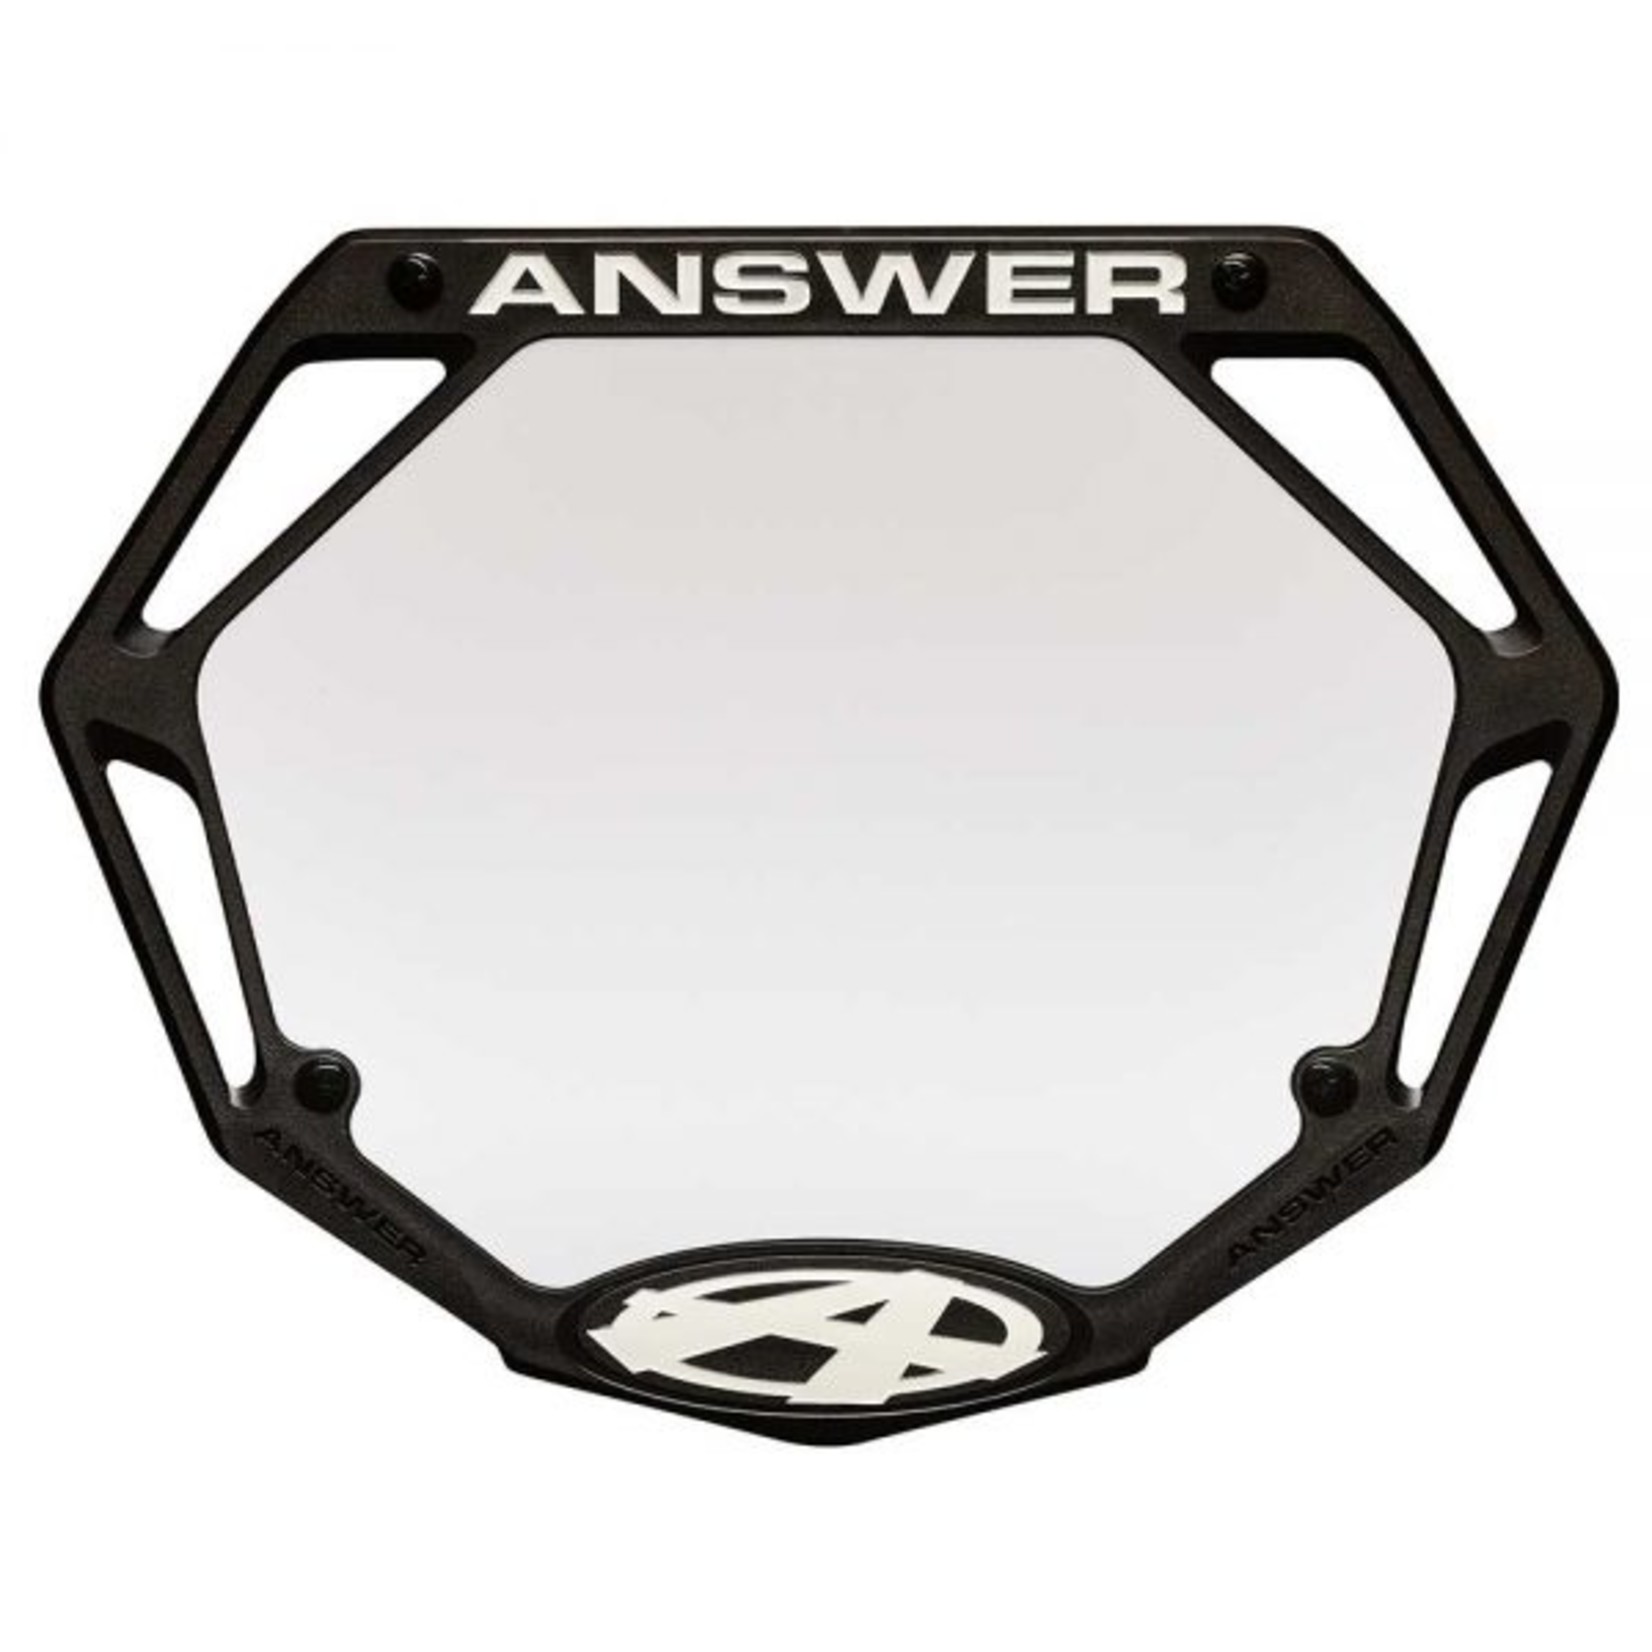 Answer BMX Answer 3D Number Plate